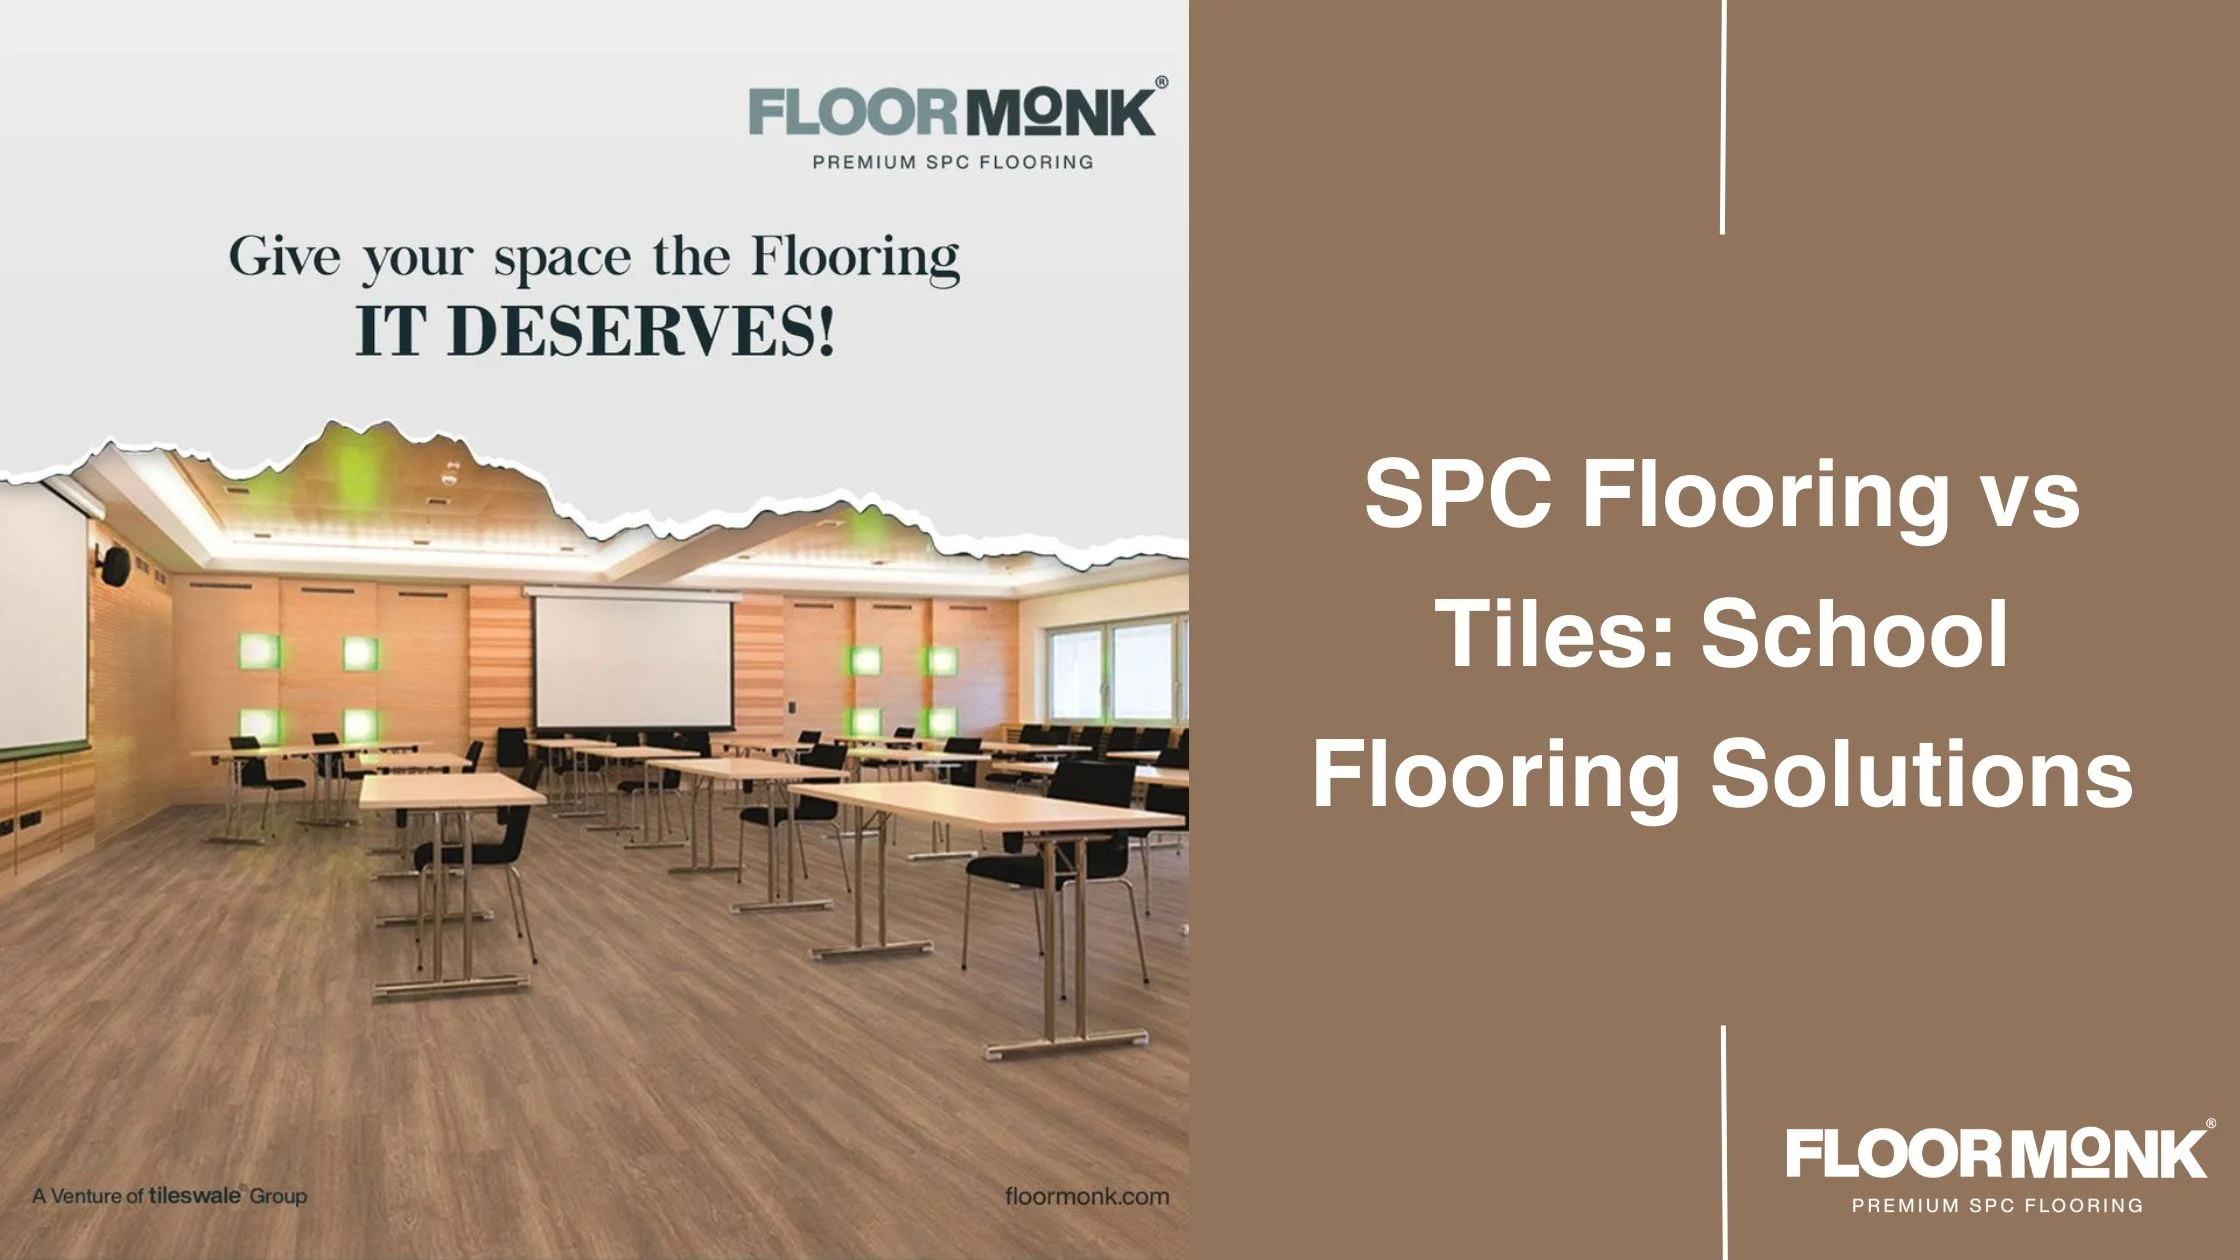 SPC Flooring Vs Tiles: School Flooring Solutions